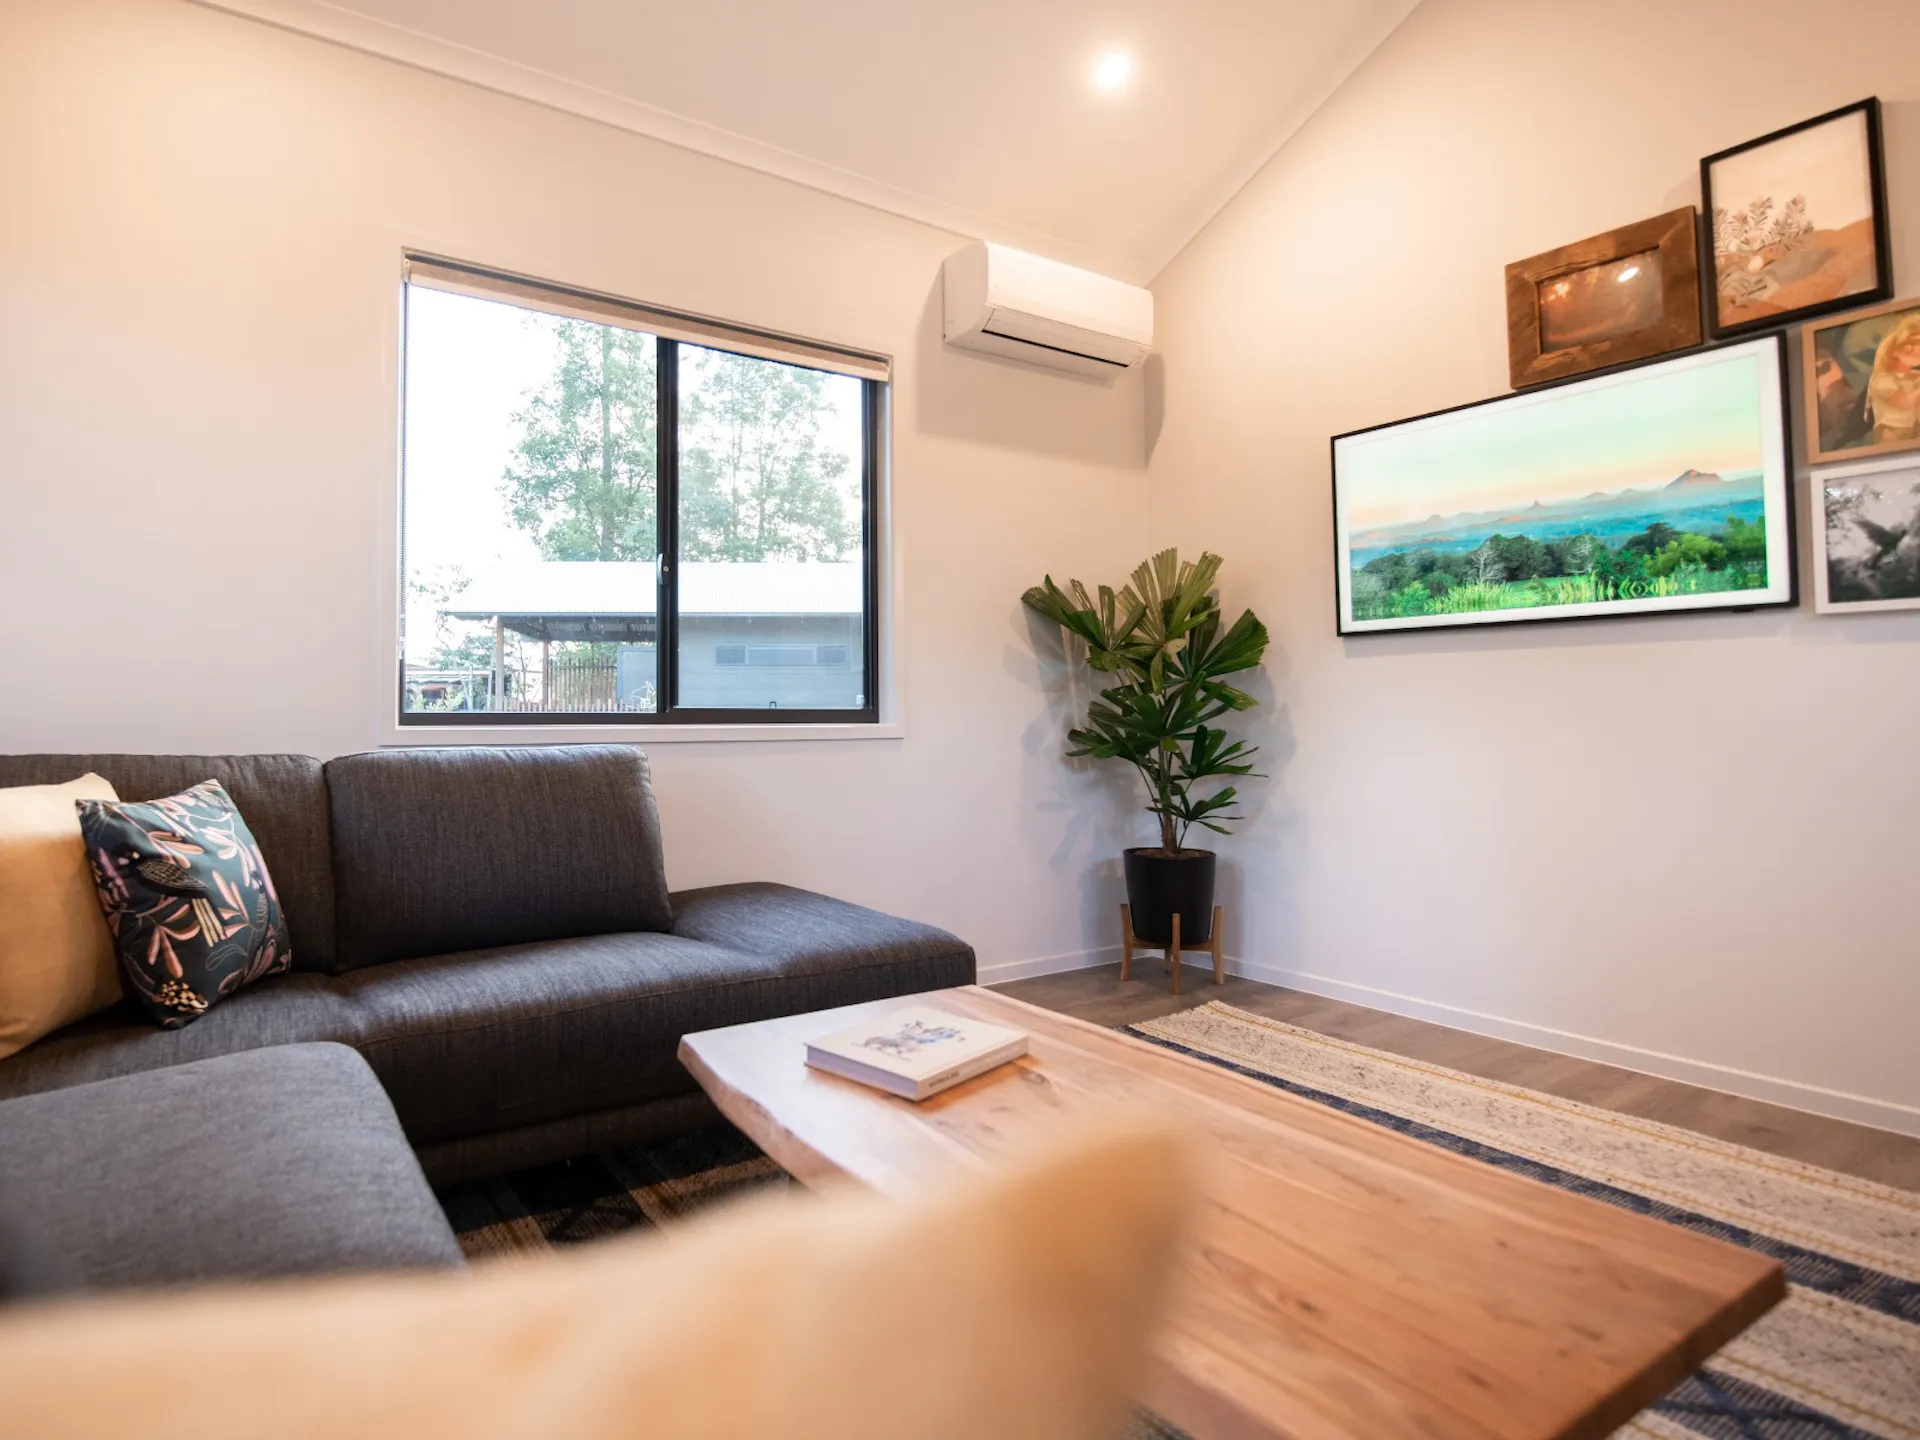 Lounge area with Samsung Frame Smart TV